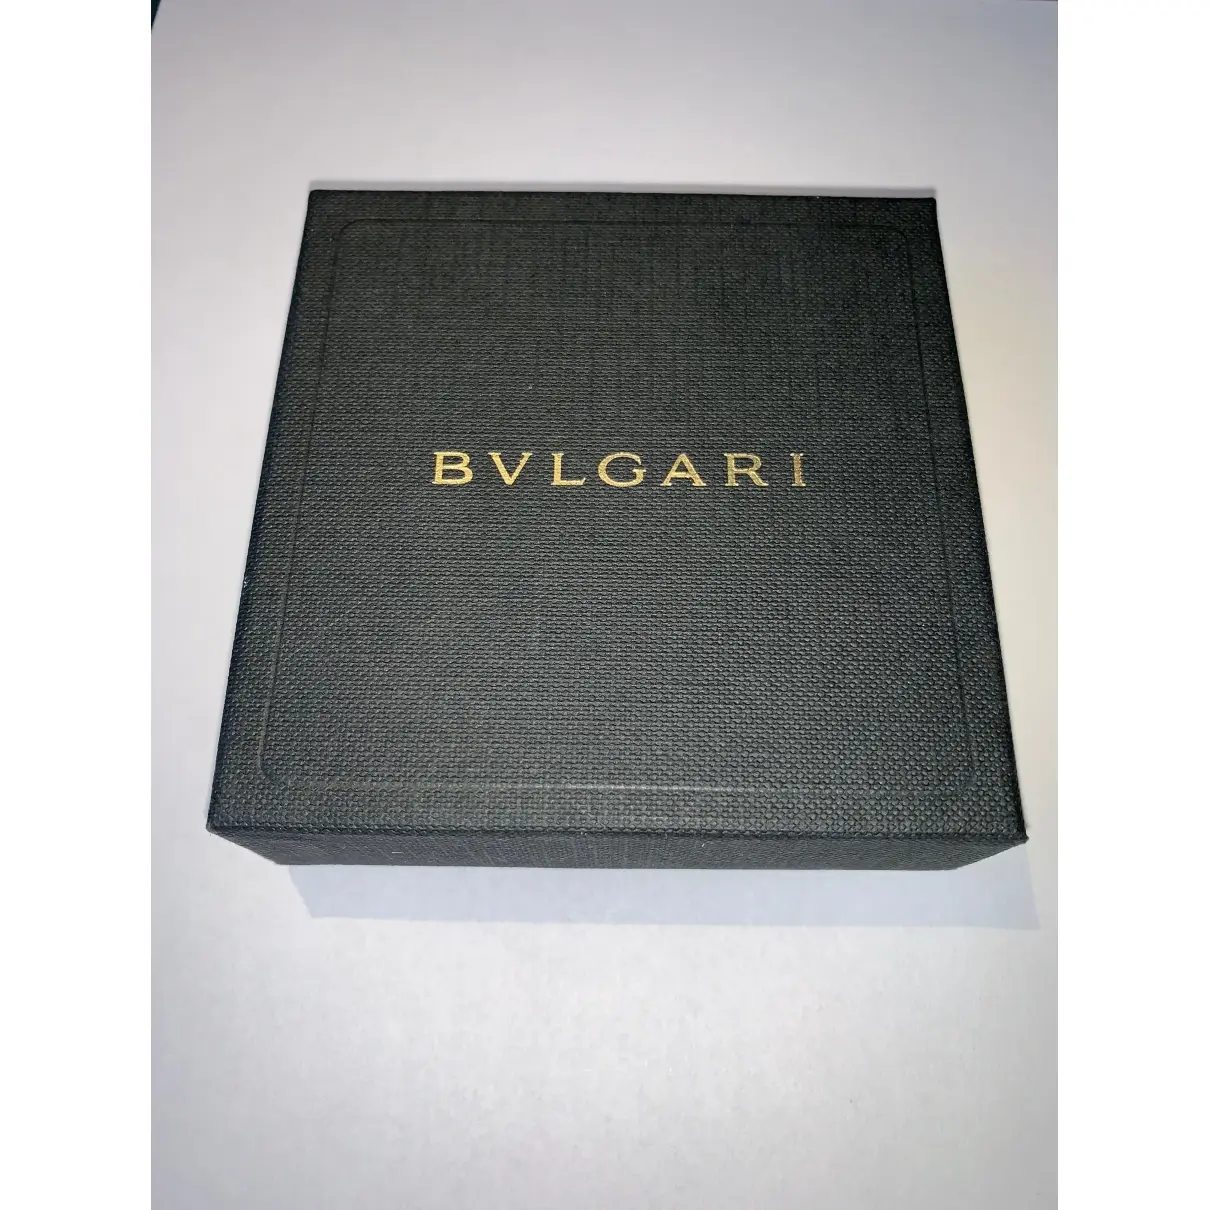 Buy Bvlgari Leather bracelet online